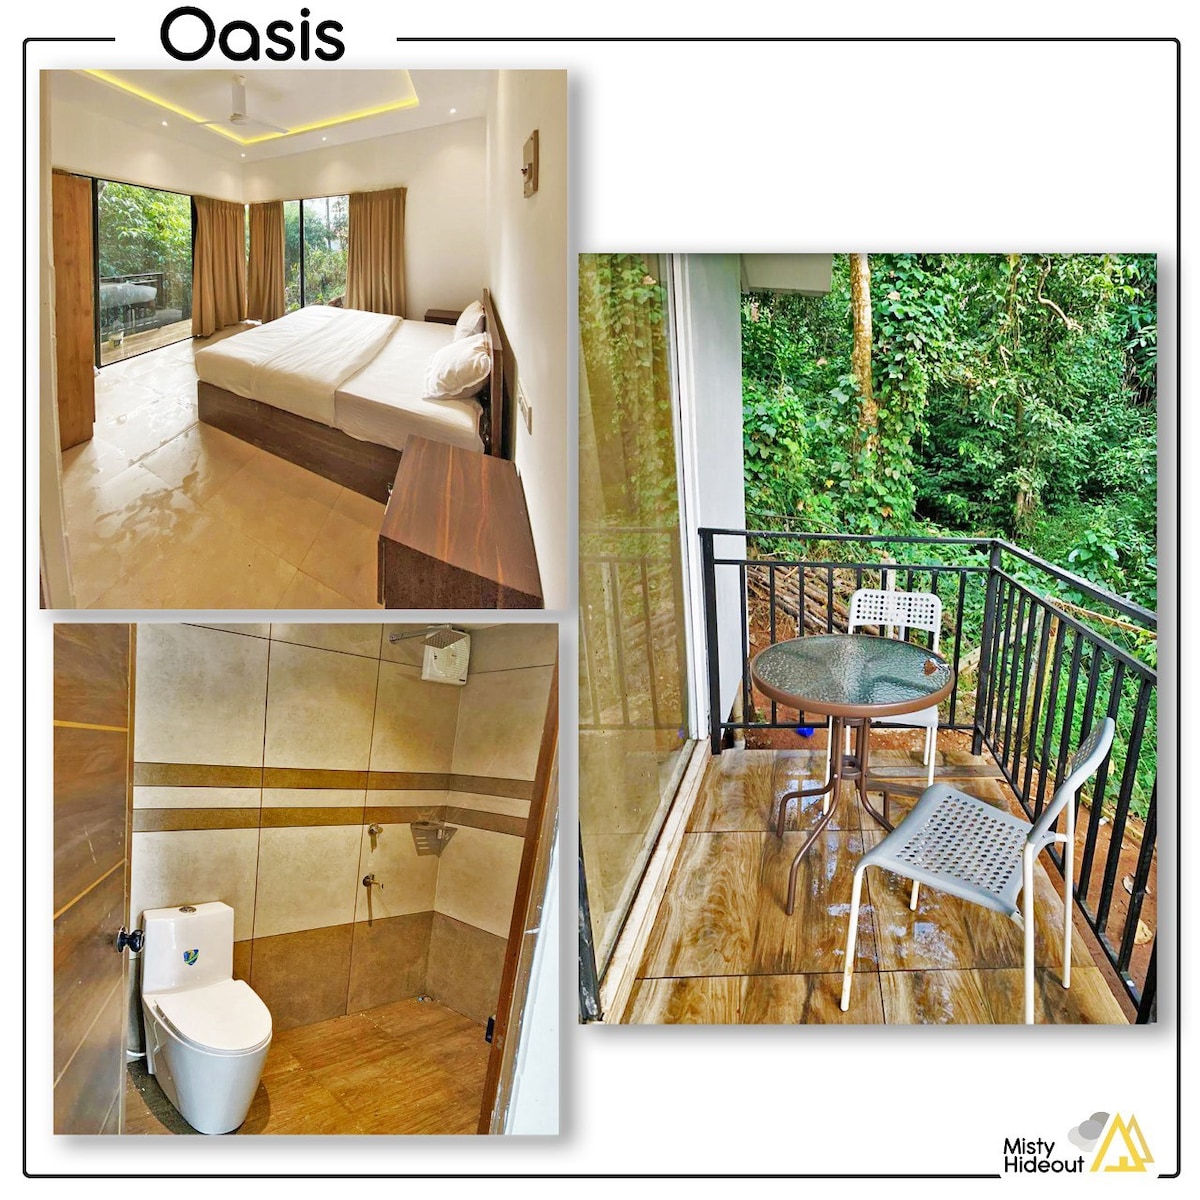 Oasis - One bedroom forest villa